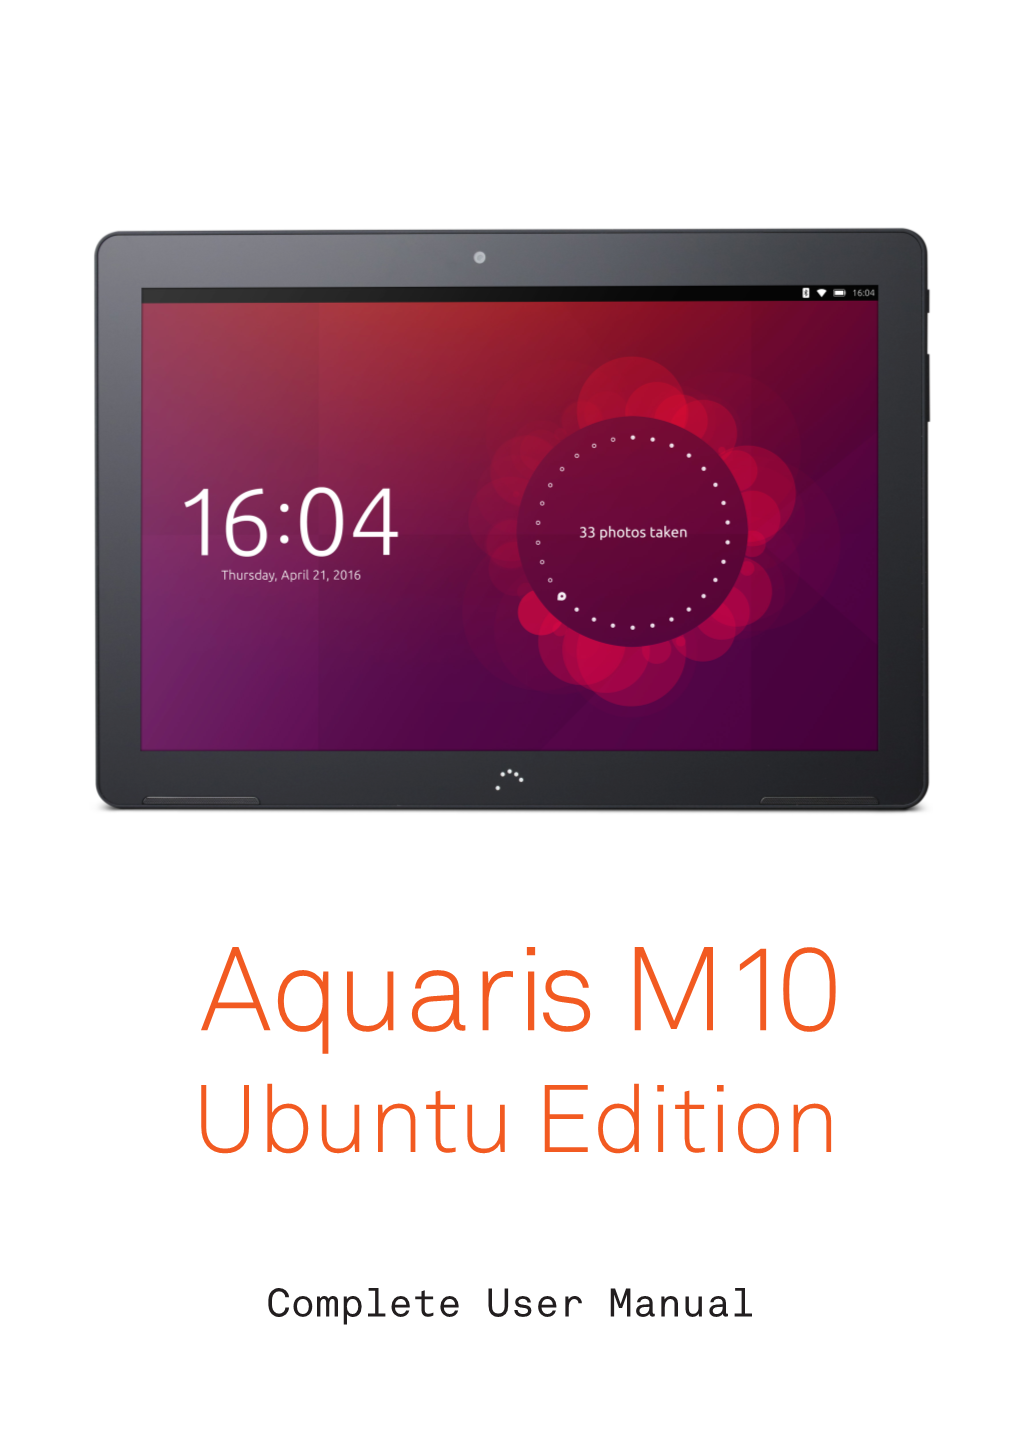 Ubuntu Edition